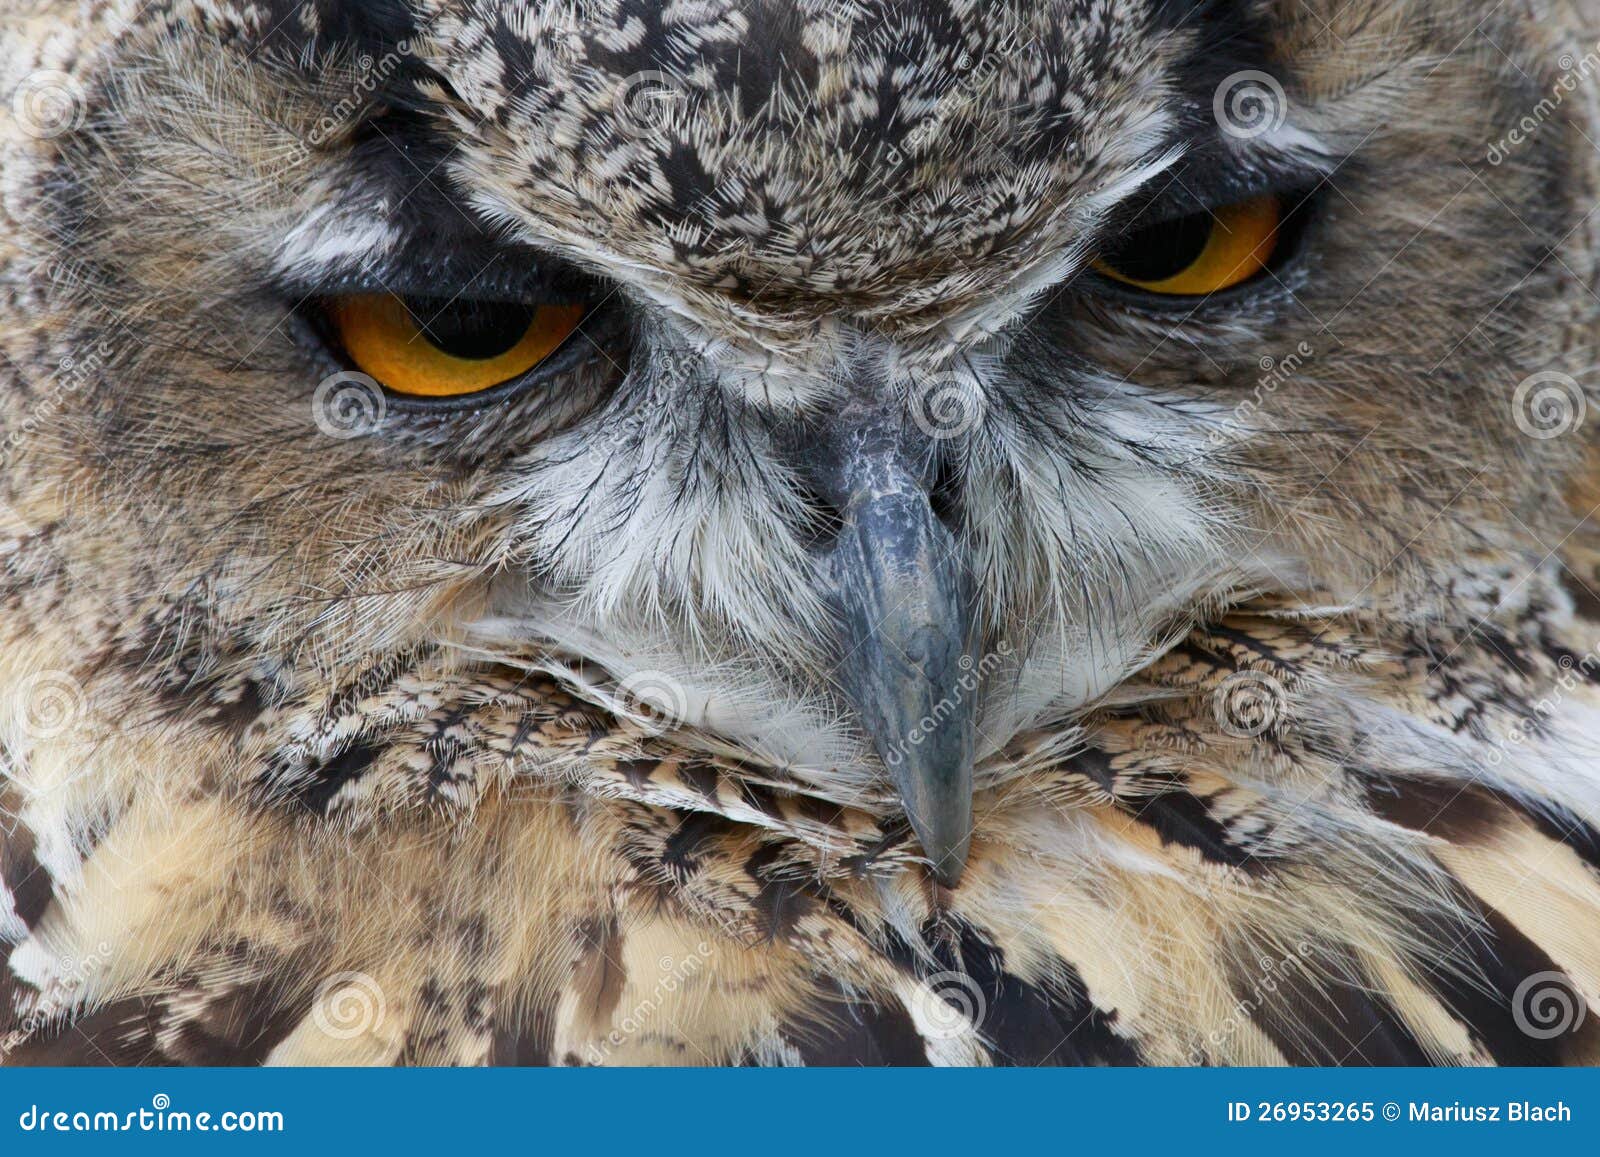 Eagle owl stock image. Image of macro, closeup, outdoors - 26953265